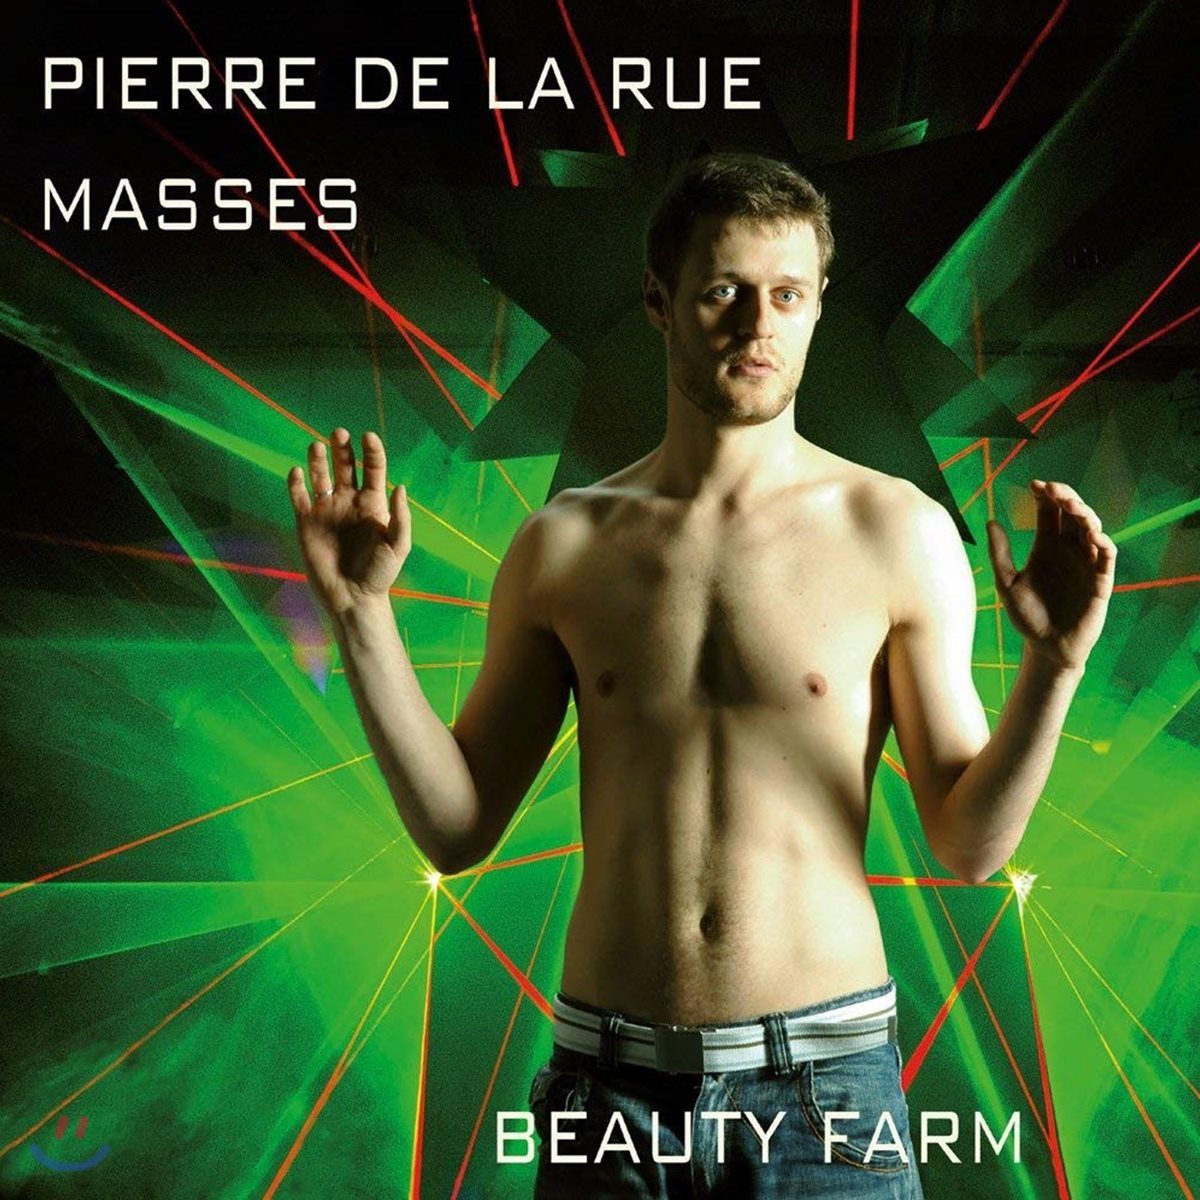 Beauty Farm 피에르 들라뤼: 네 곡의 미사 (Pierre de la Rue: Missa) 뷰티 팜